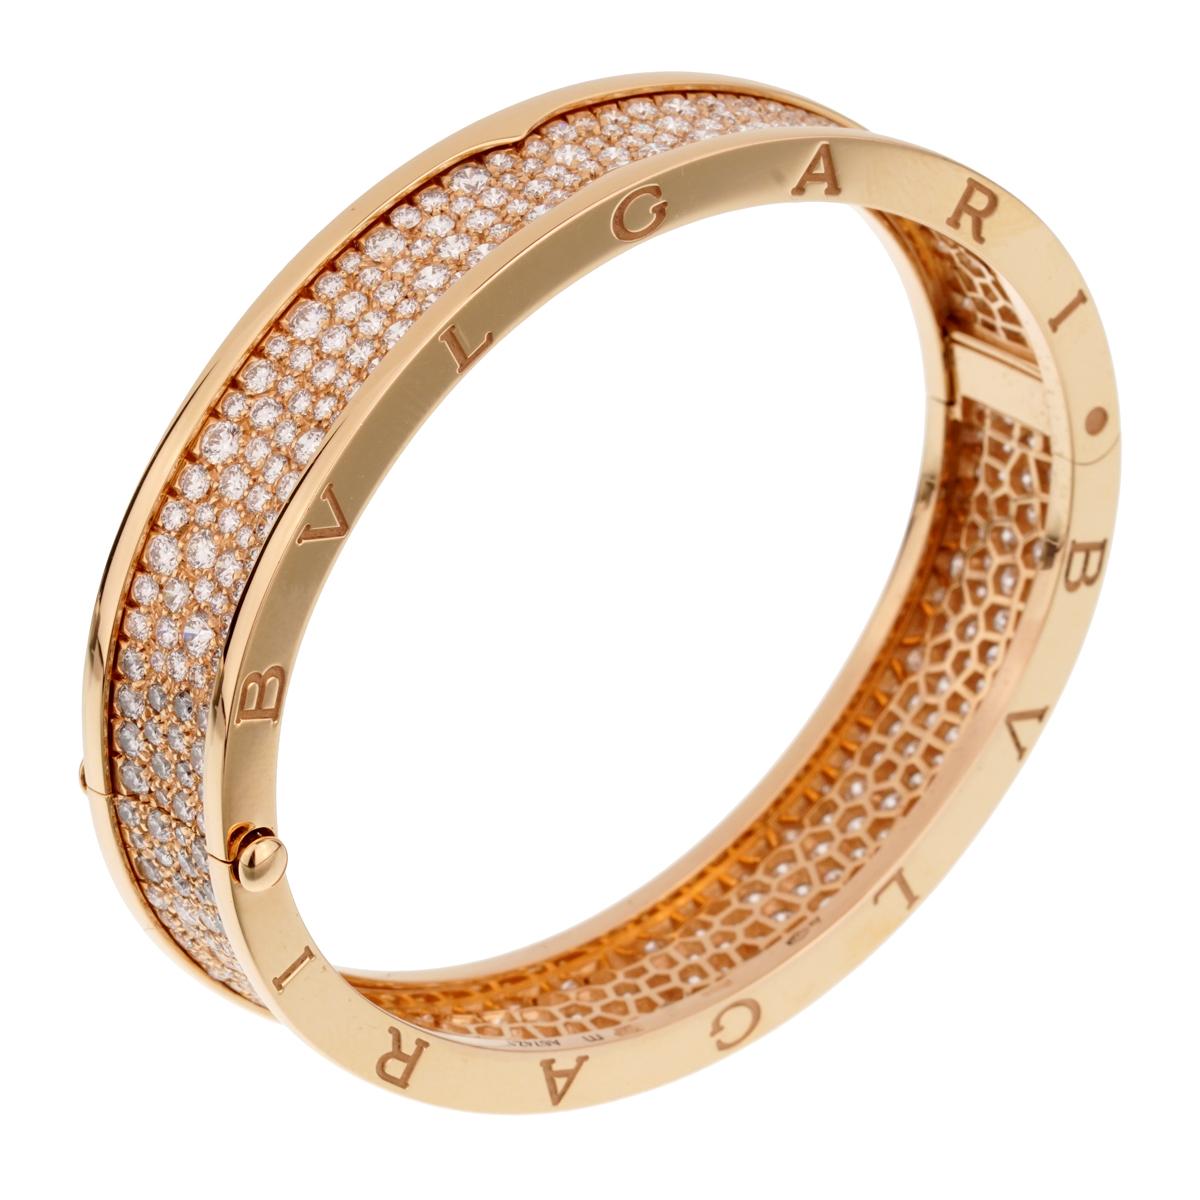 An iconic Bulgari Bzero1 bangle bracelet adorned with 9.52ct of the finest round brilliant cut diamonds. The bracelet measures a size medium.

The bracelet retails for $64,000 + Tax